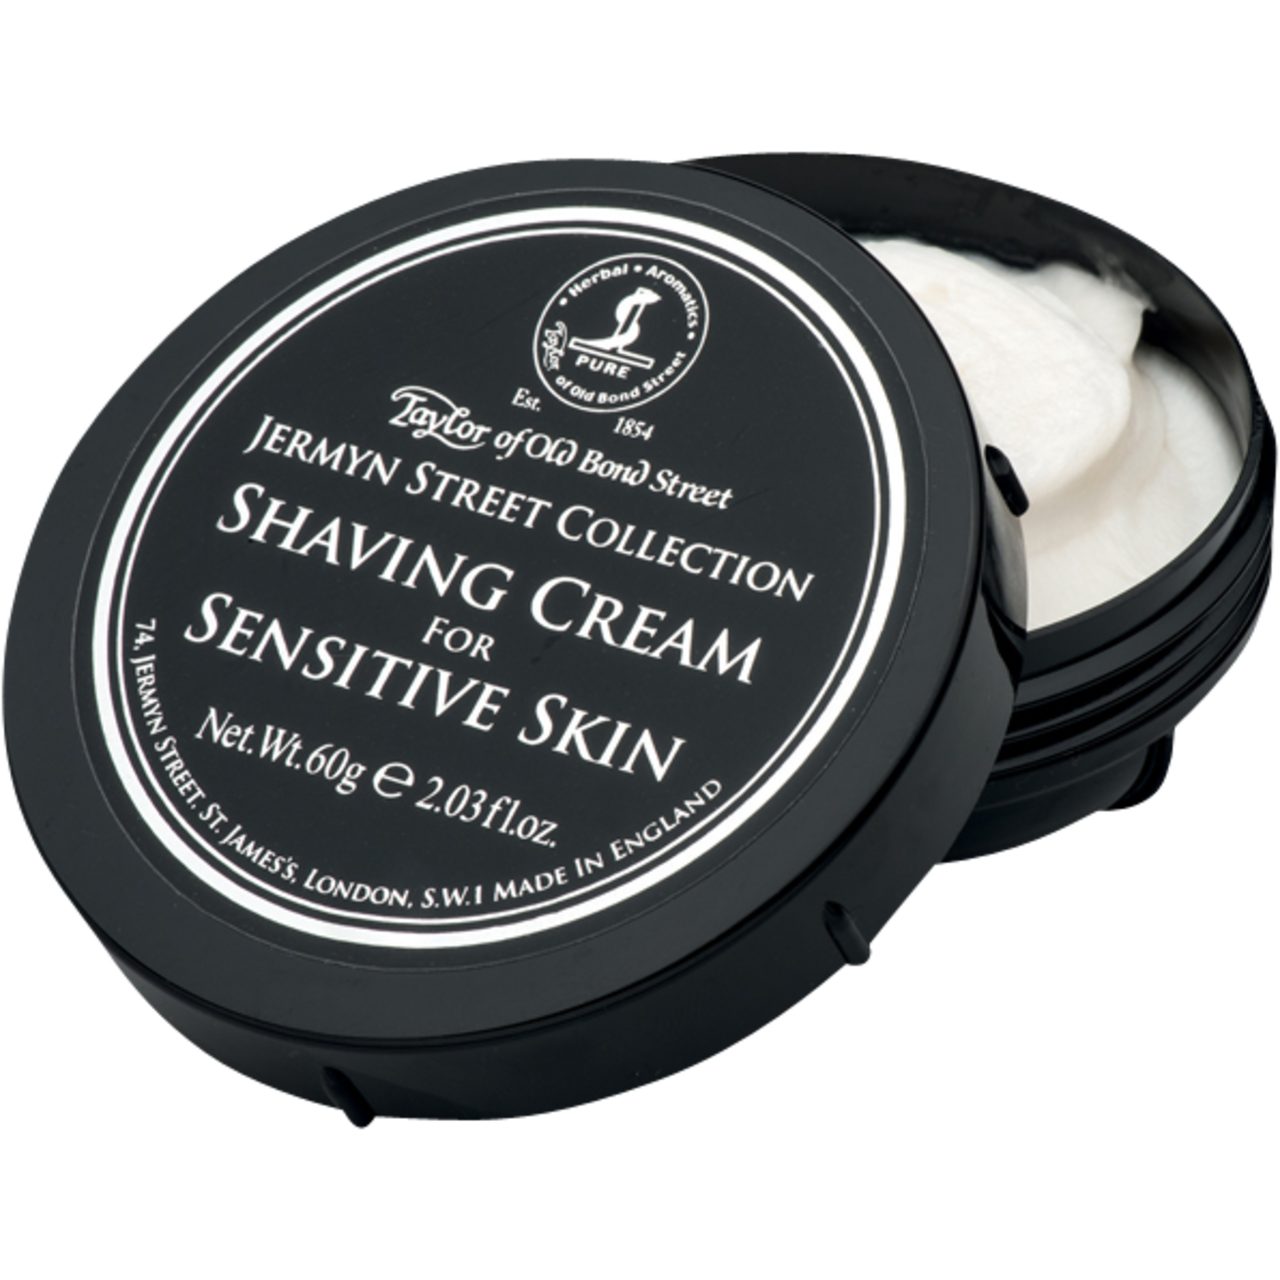 Cream Jermyn of Old for Street Collection Bond Street Shaving Skin Rasiercreme sensitive Taylor